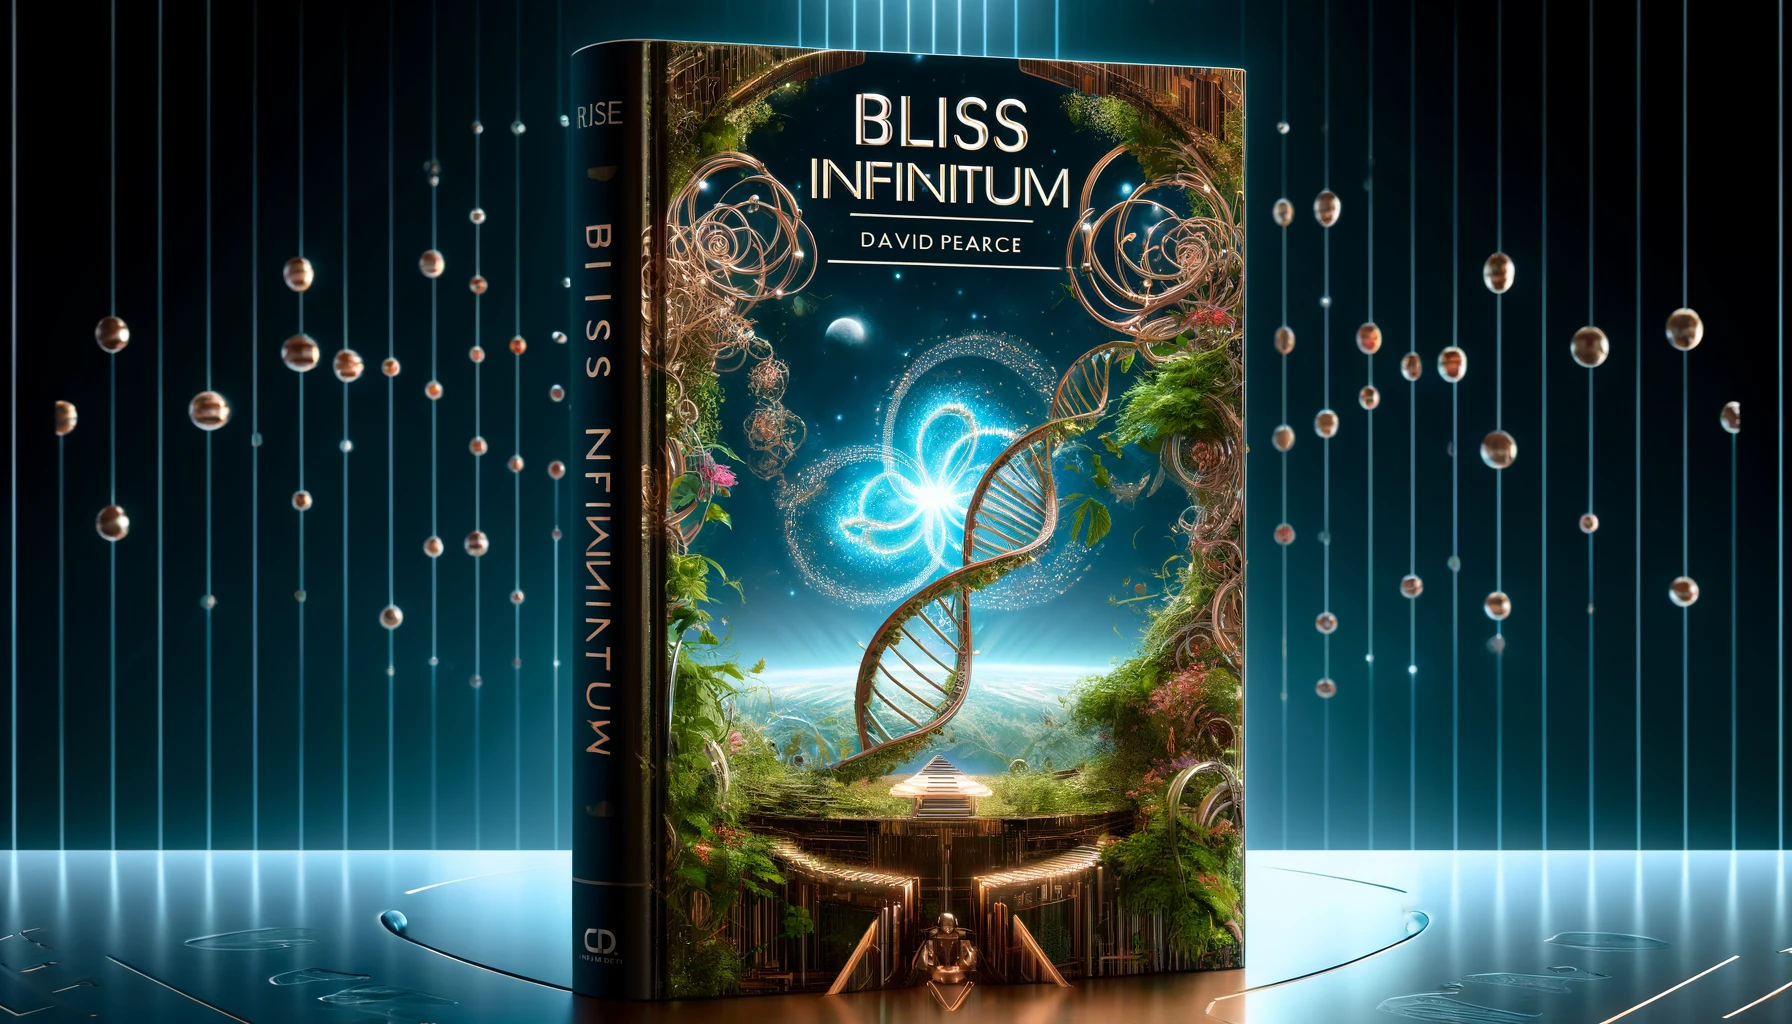 Bliss Infinitum by David Pearce